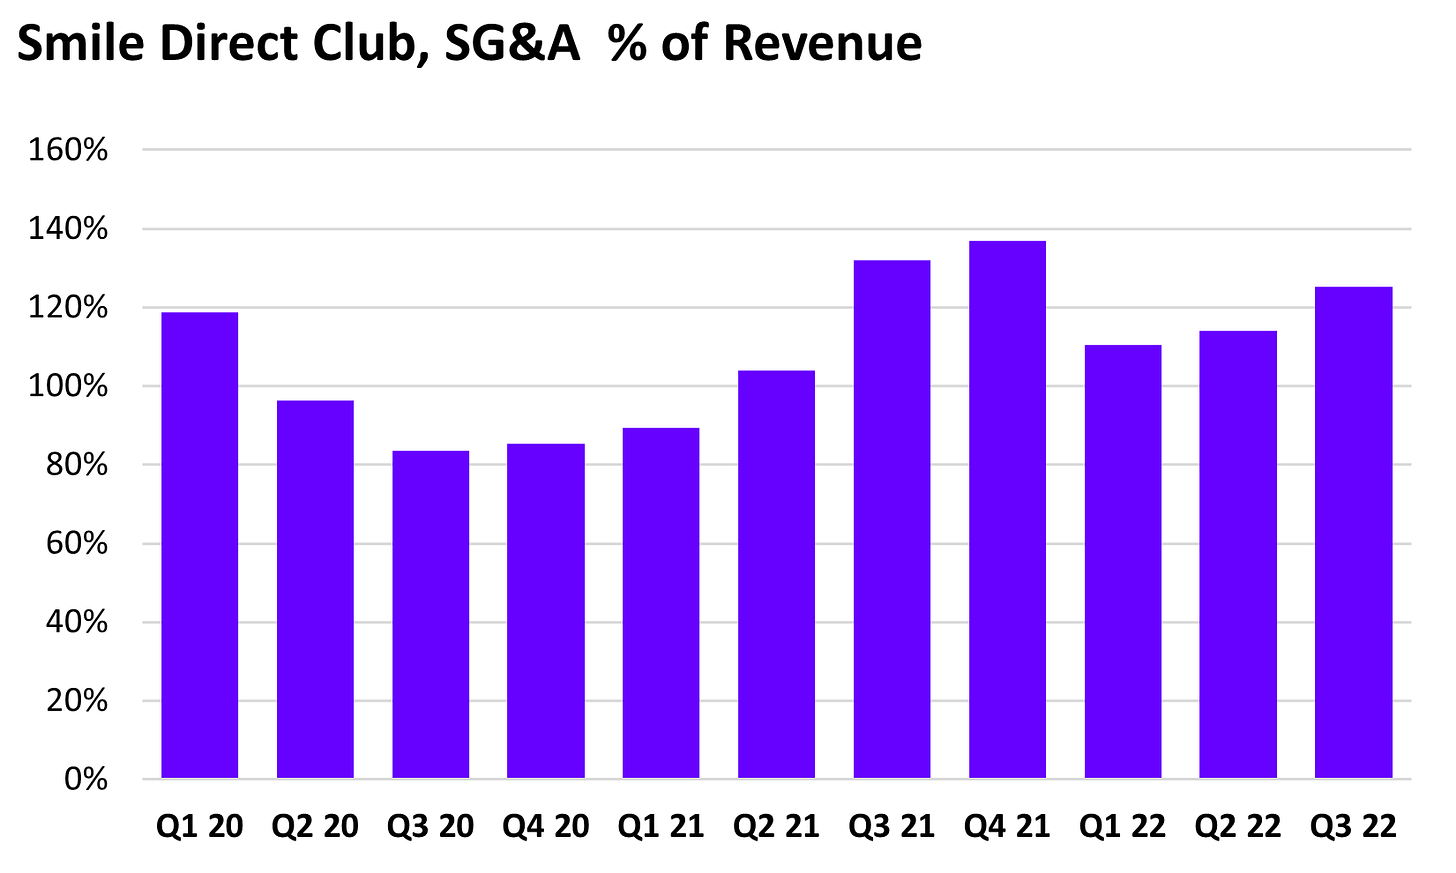 Smile Direct Club SG&A expense as a percent of revenue